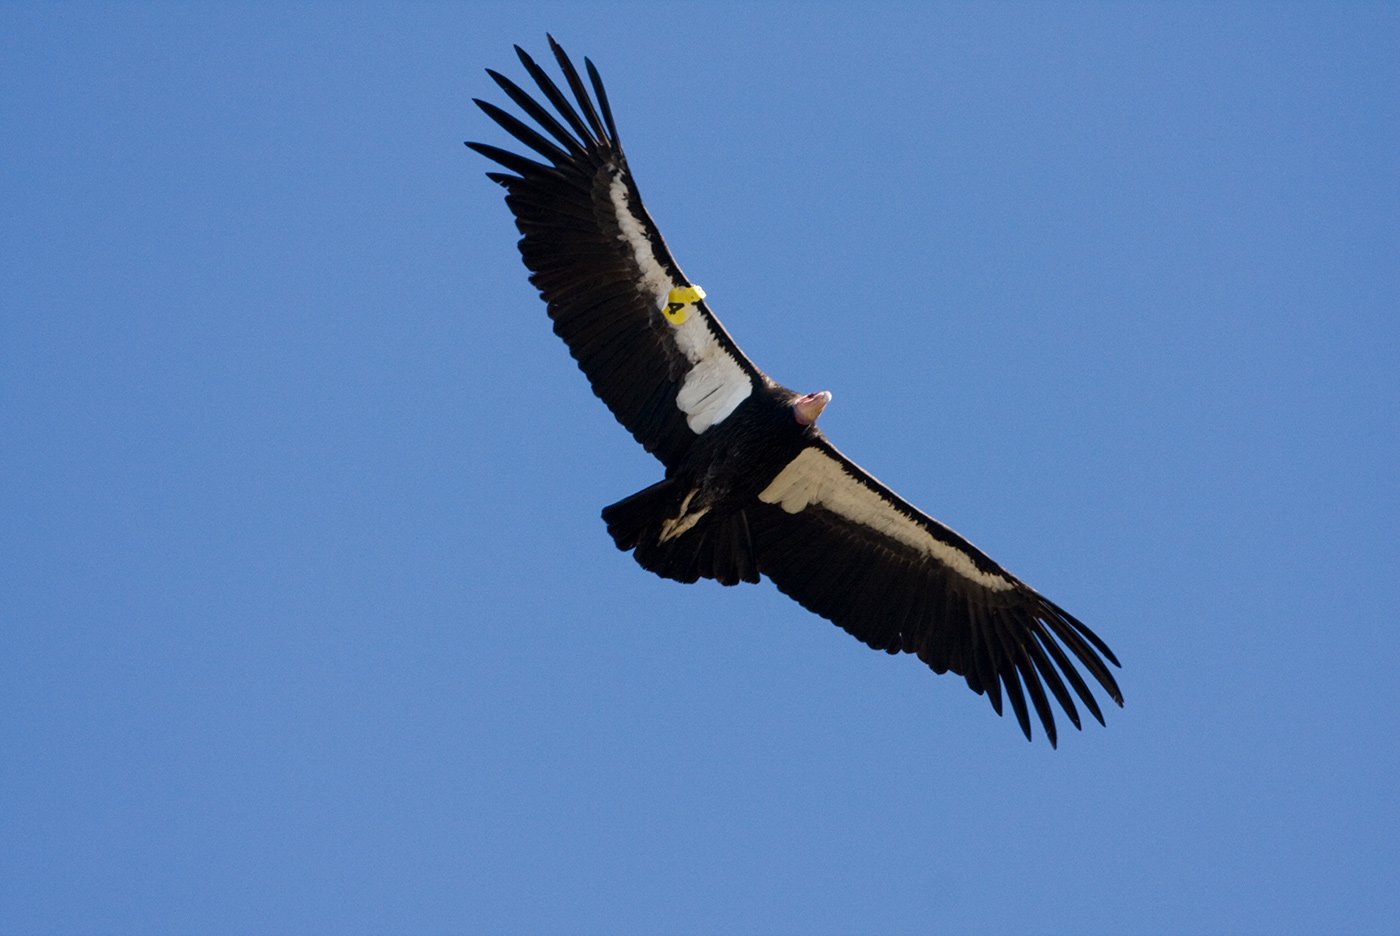 A California condor glides over Big Sur, California. Photo by Sebastian Kennerknecht/Minden Pictures.